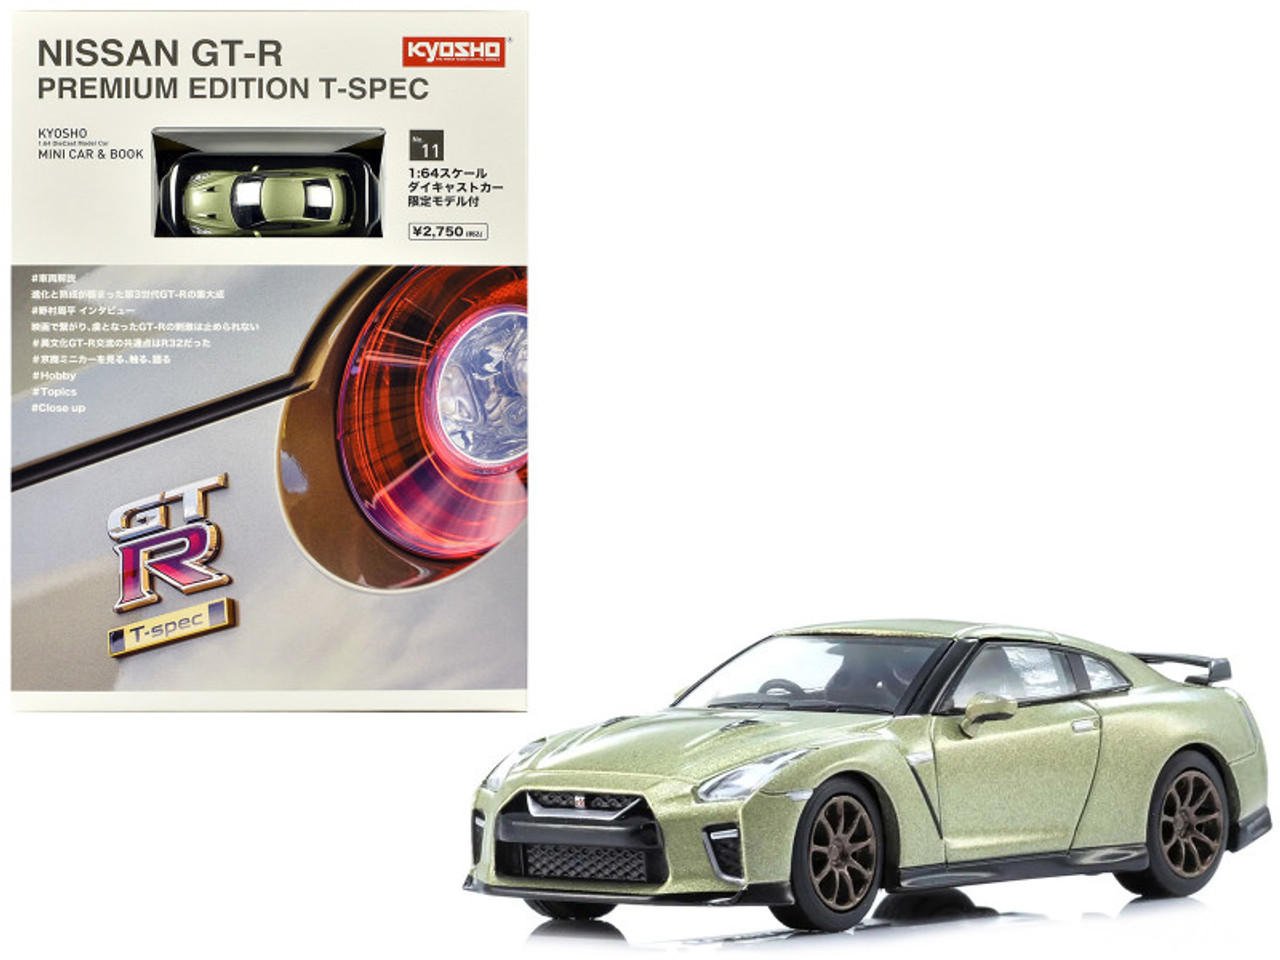 1/64 Kyosho Mini Car & Book Nissan GT-R R35 T-Spec Millenium Limited Edition (Jade Green) Car Model